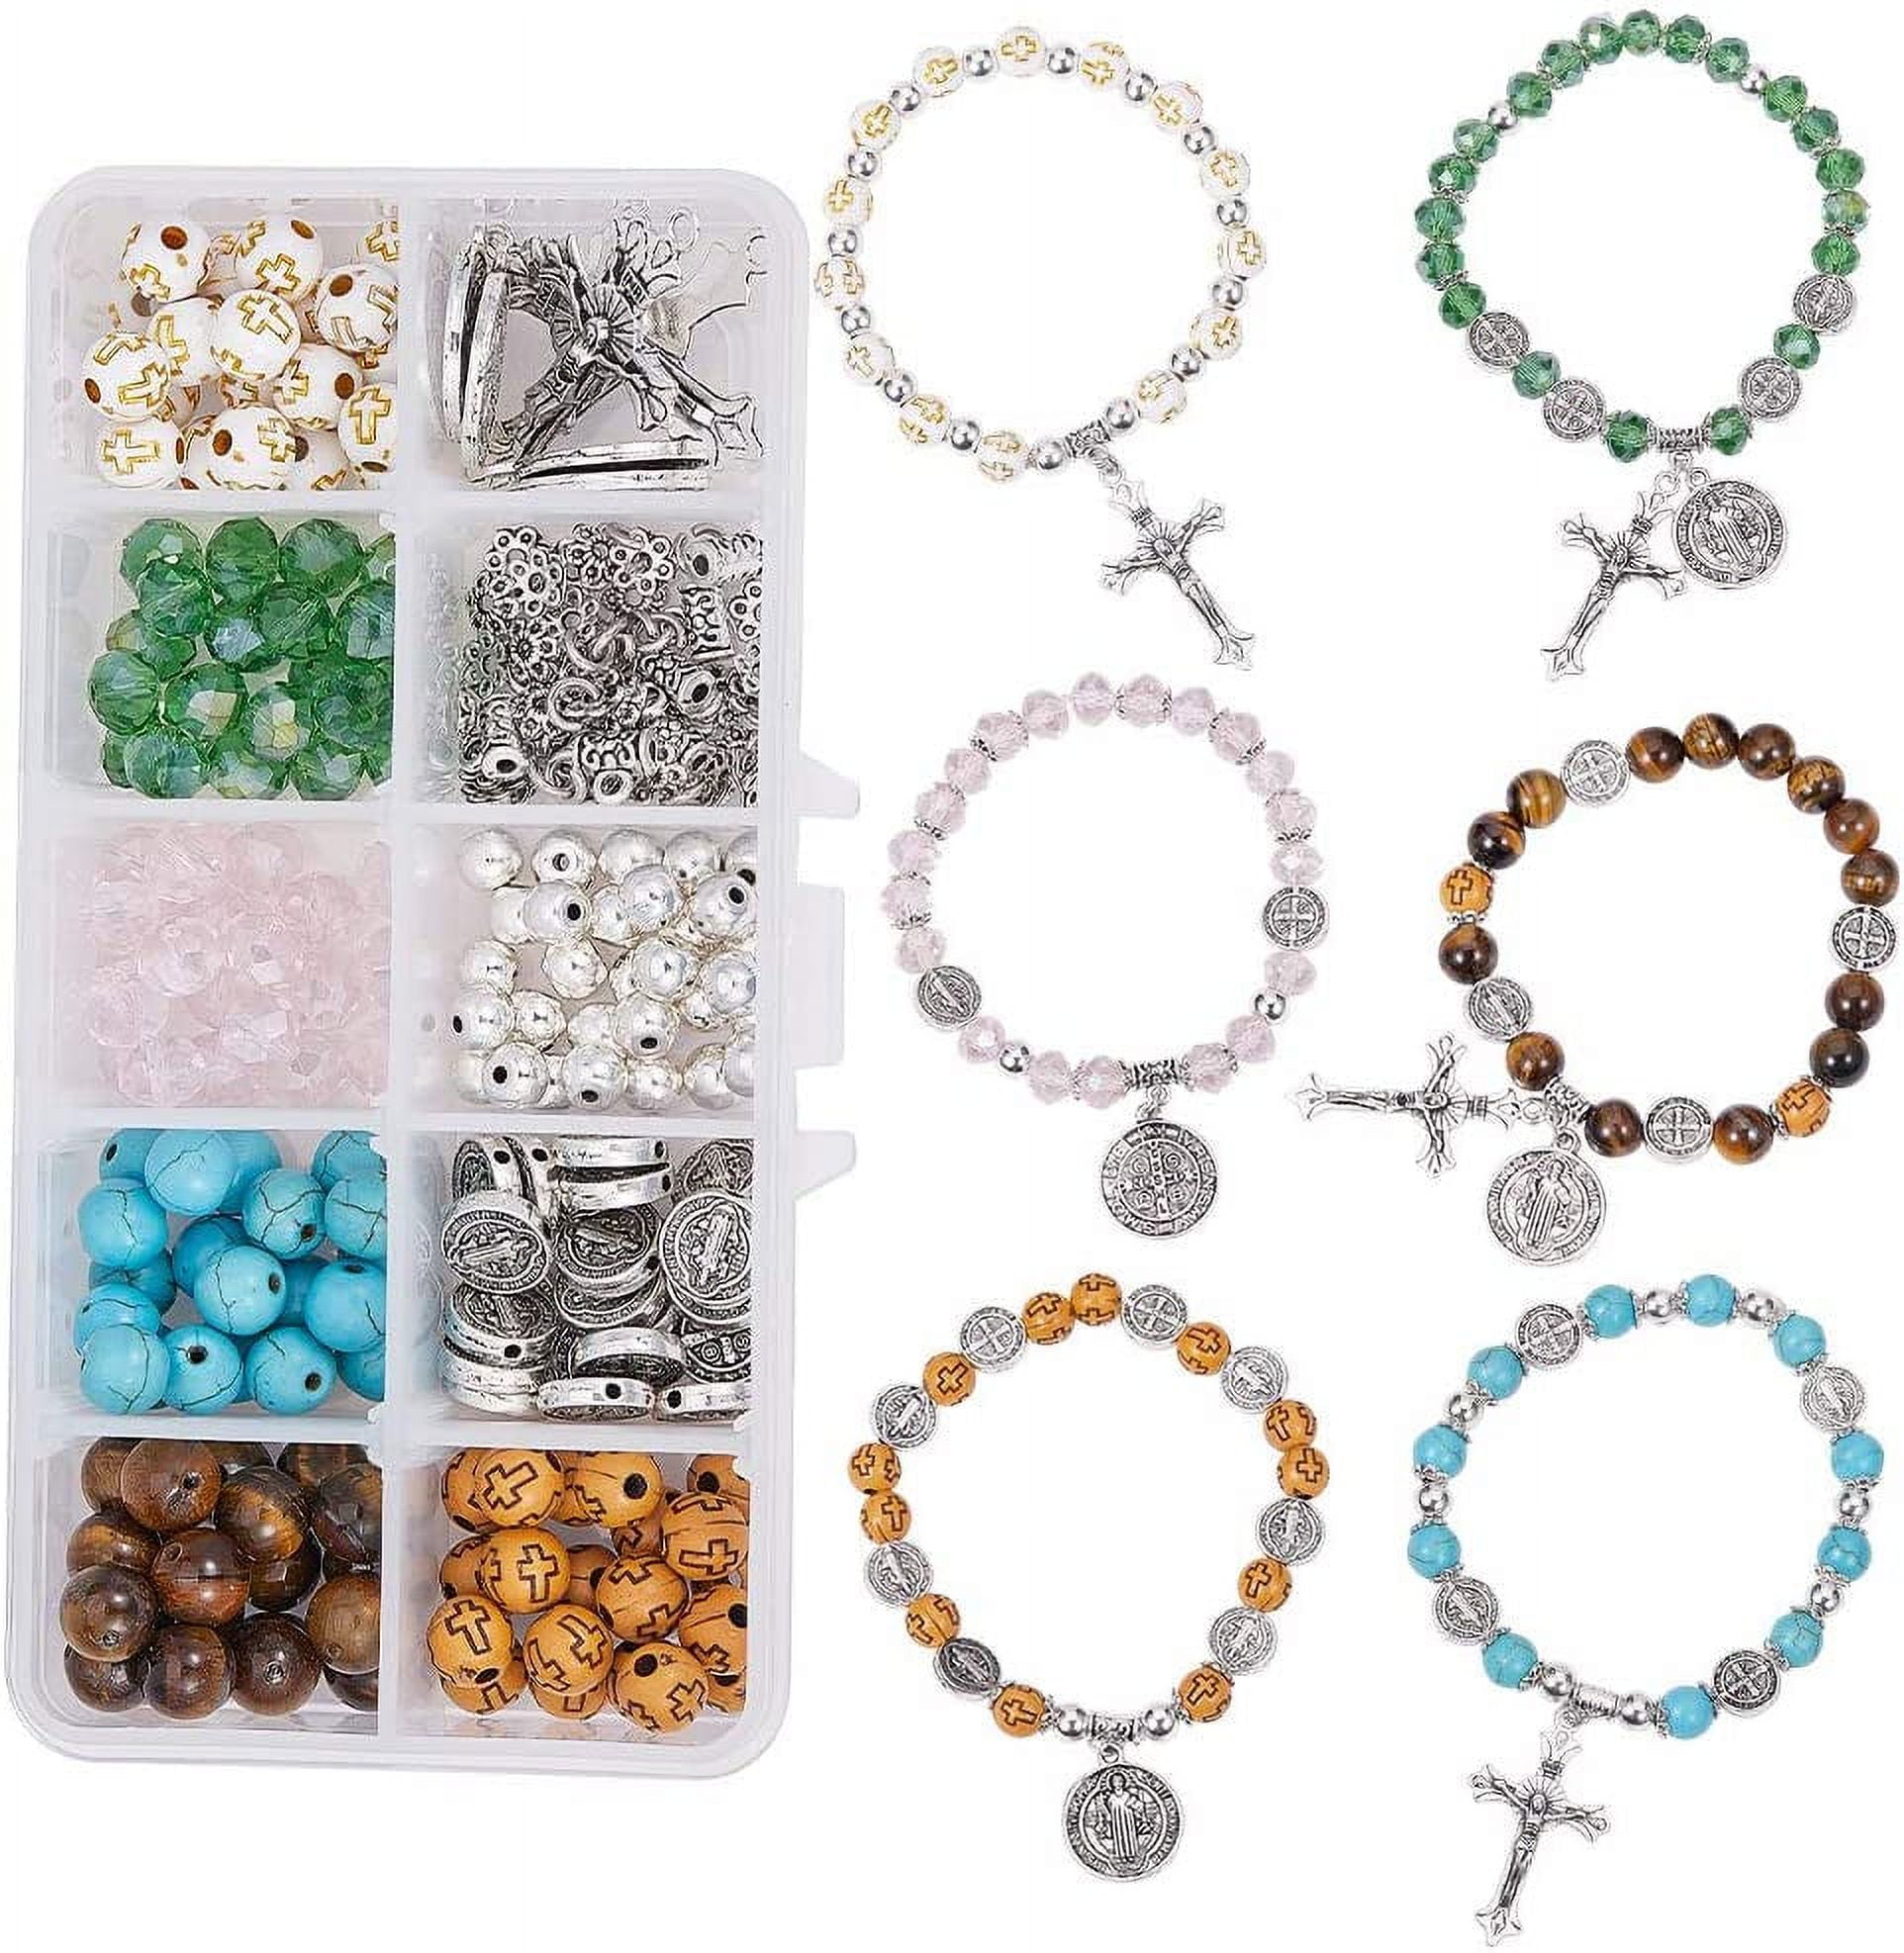 70pcs Bracelet Necklace Set DIY Creative Charm Bracelet Making Set Jewelry  Making Kit For Girl Birthday Gifts